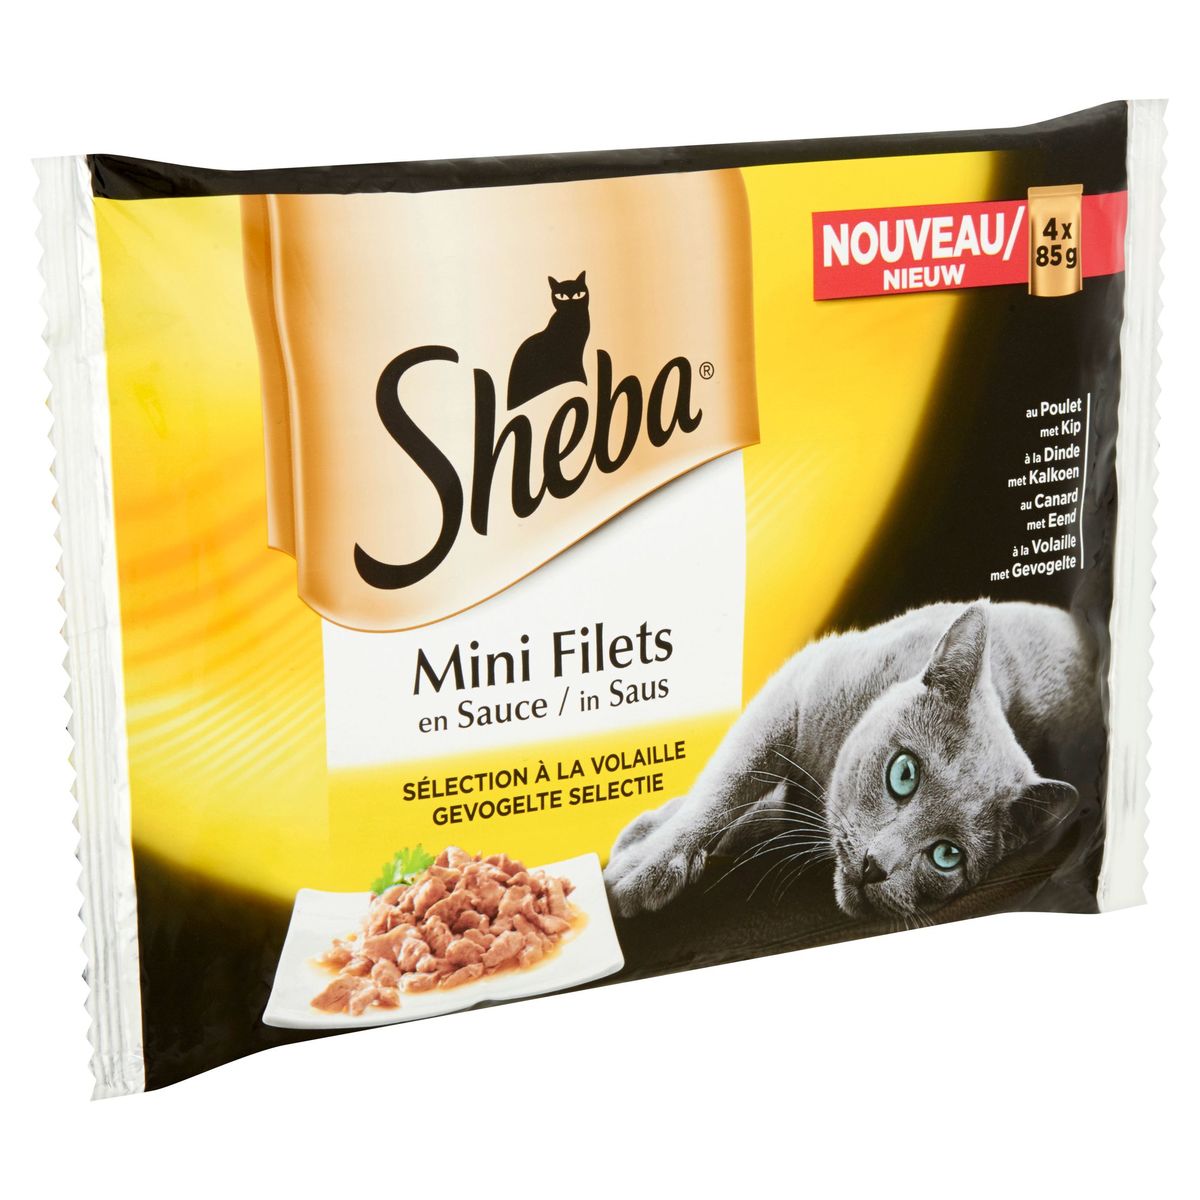 Sheba Mini Filets Versheidszakjes in Saus Gevogelte Selectie 4 x 85 g